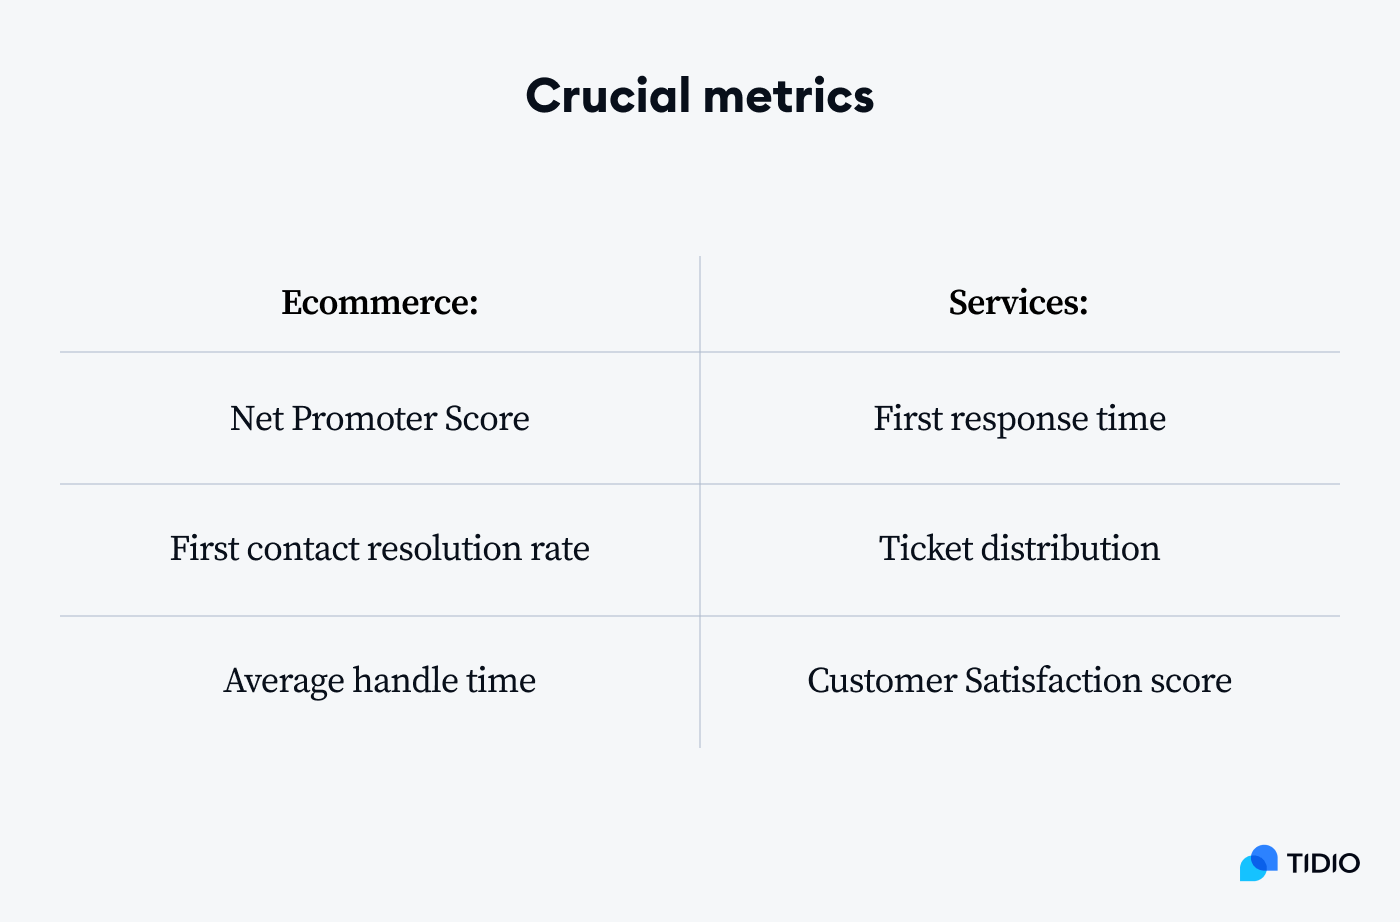 crucial metrics listed on image